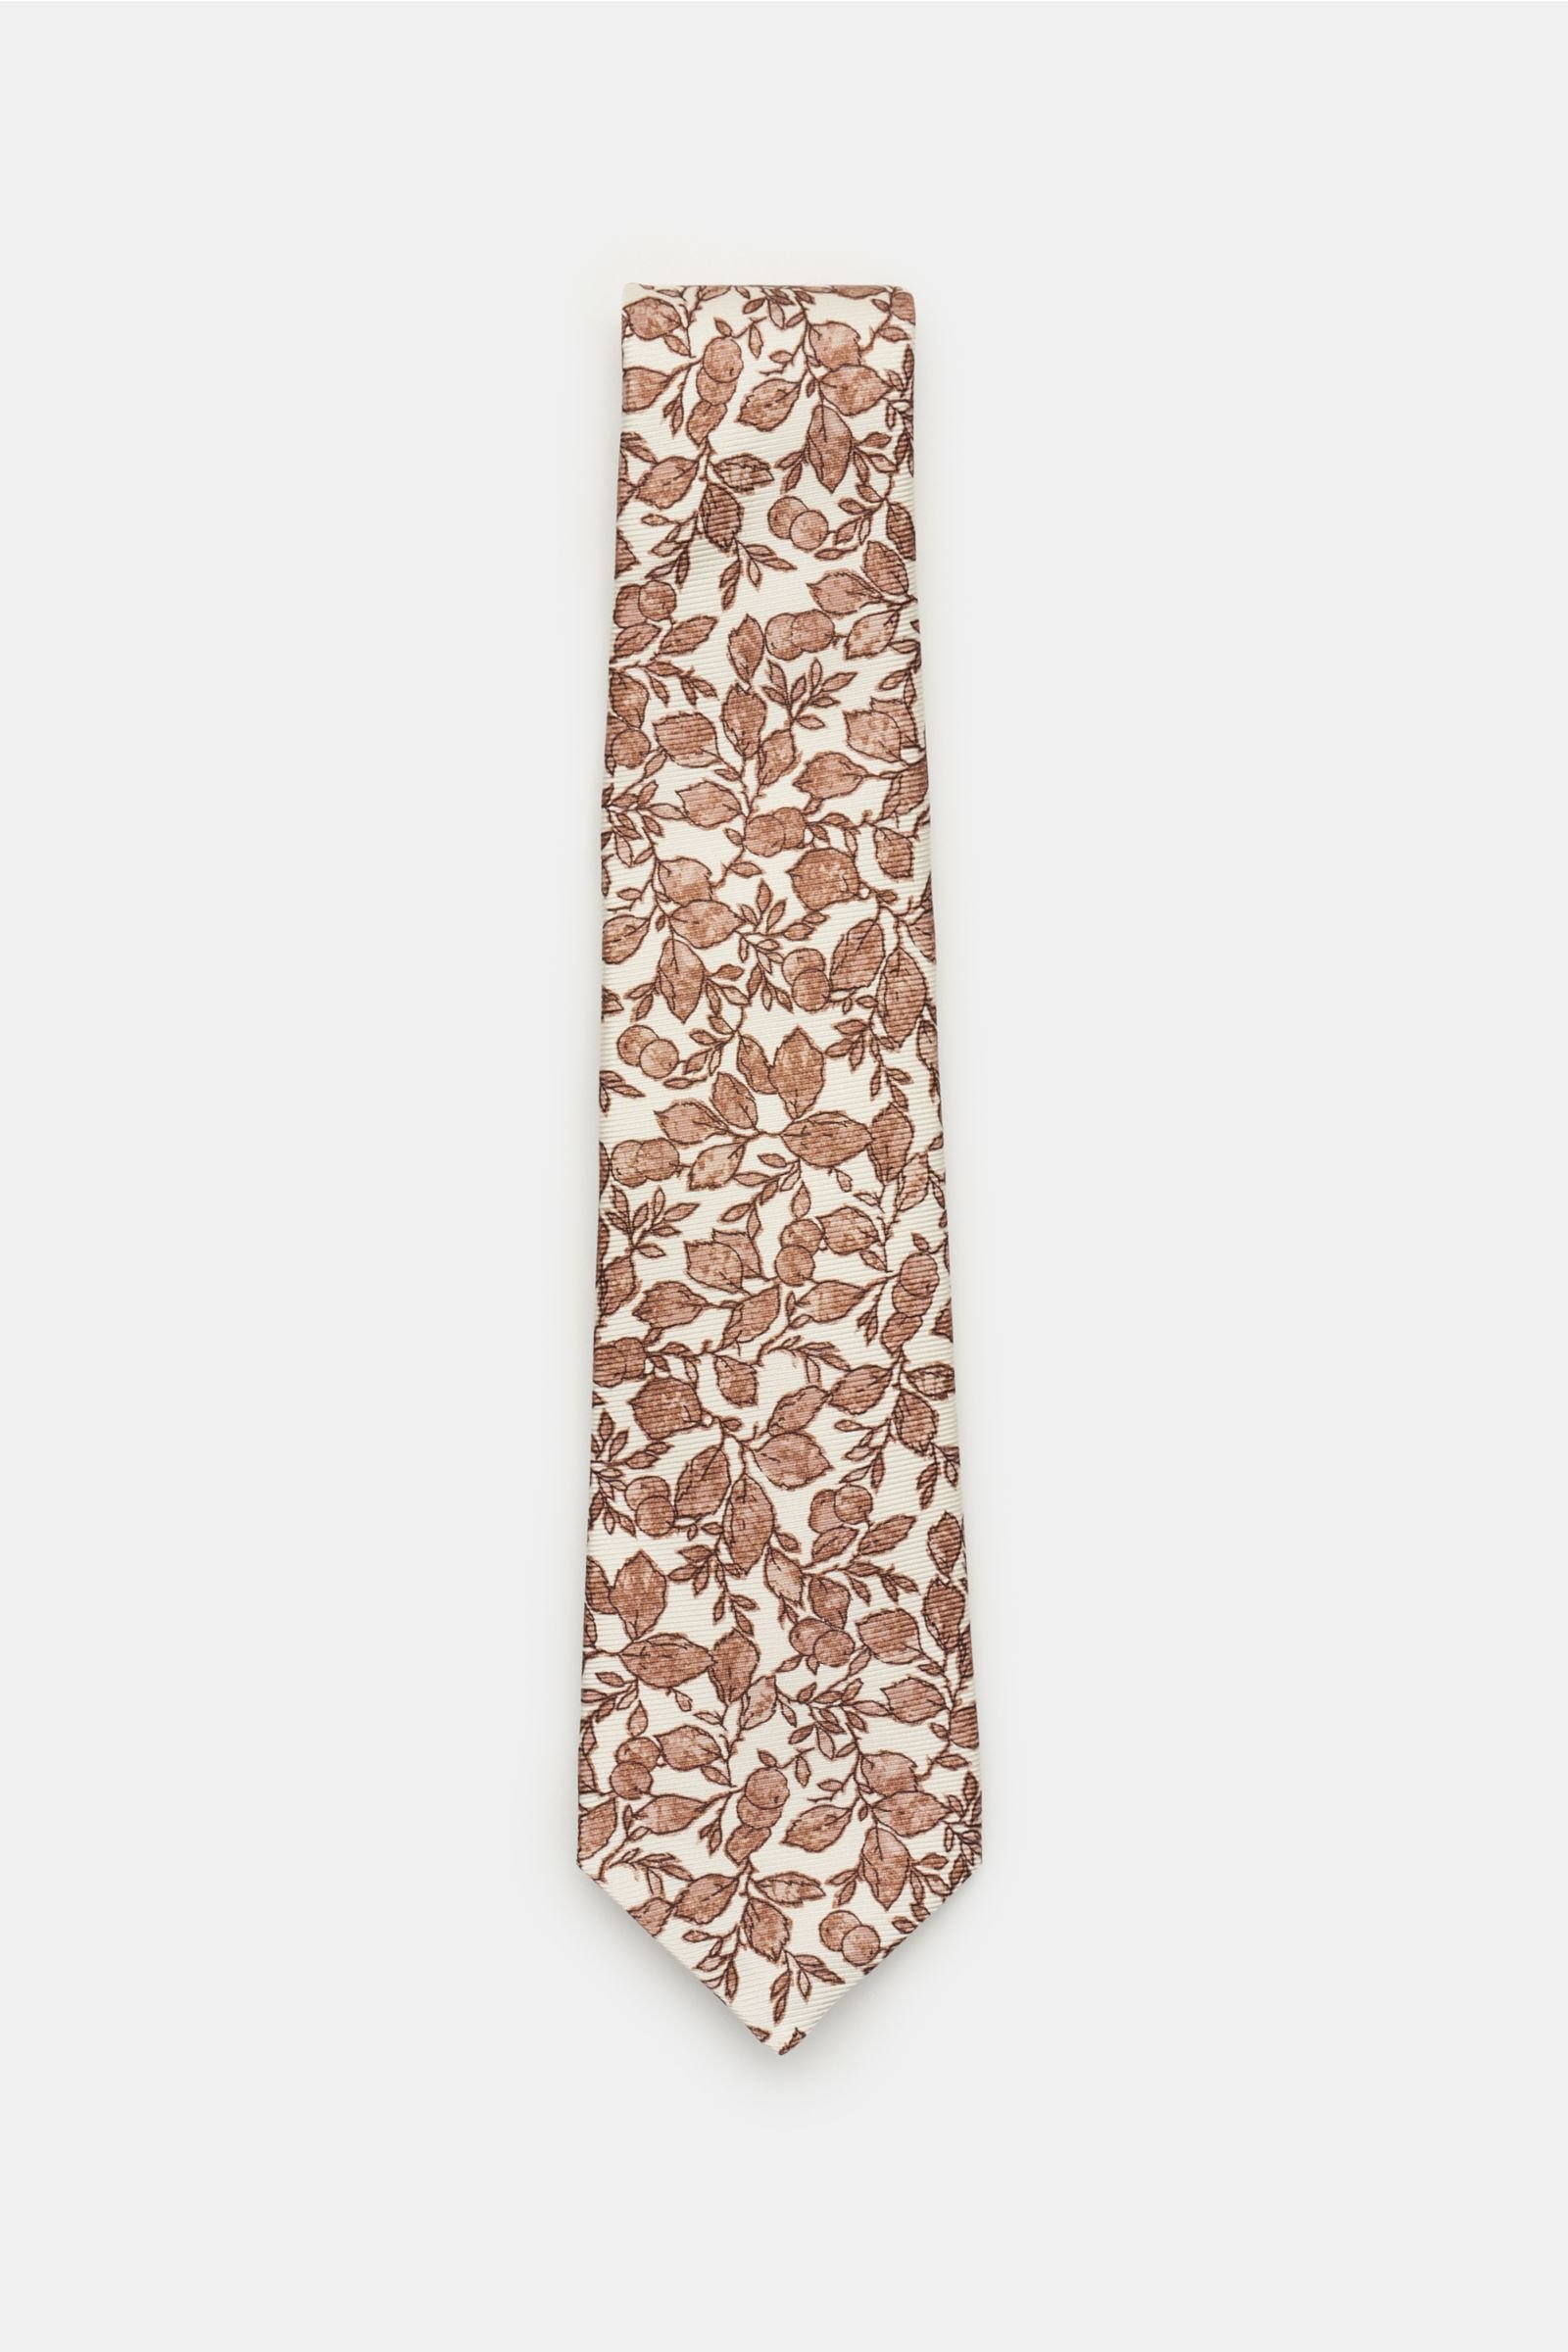 Silk tie brown/cream patterned